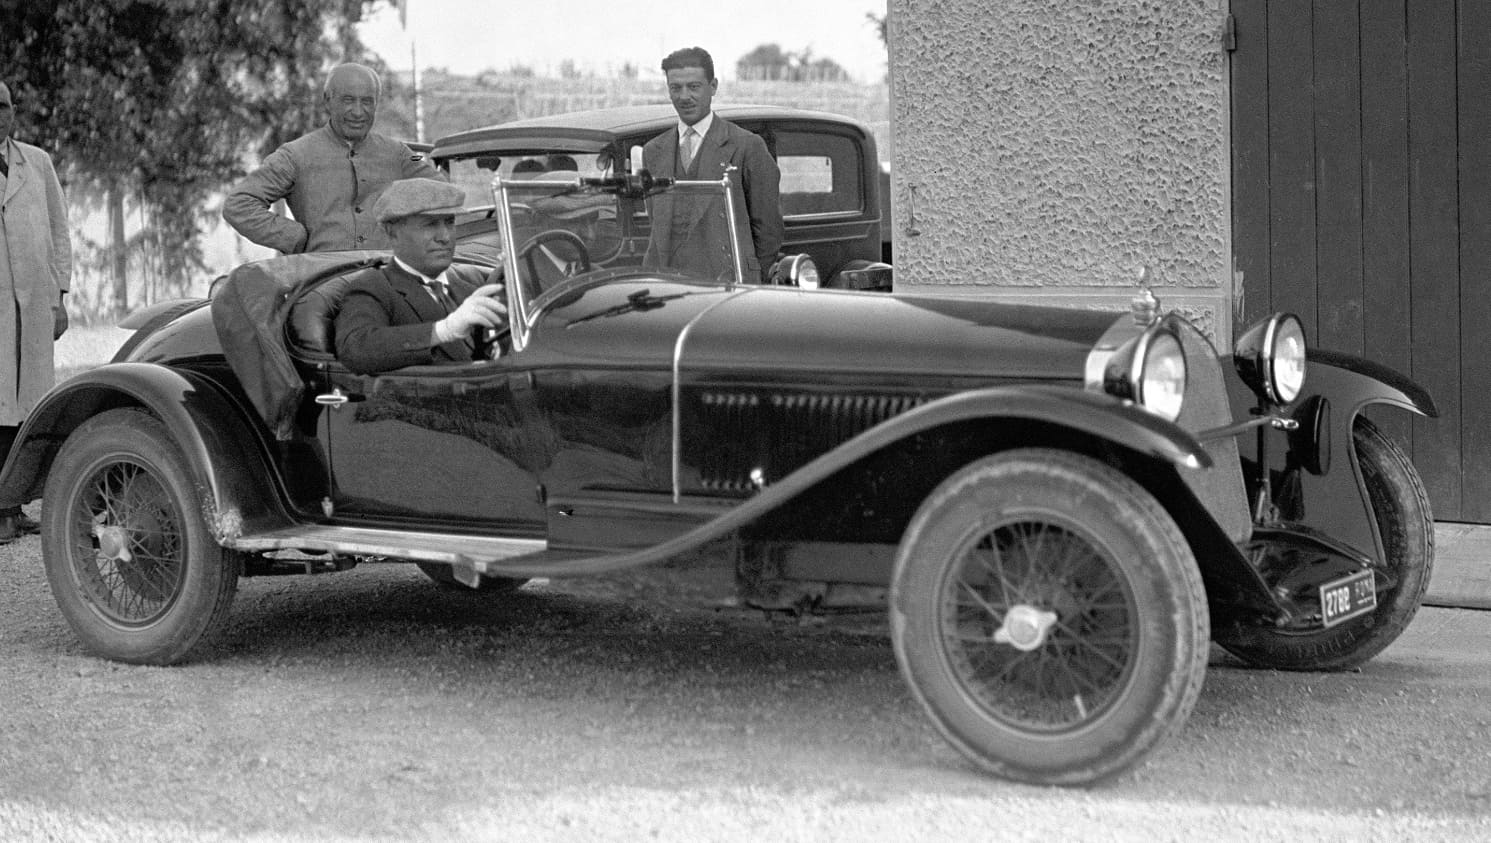 Mussolini's car, Restoration begins on Mussolini’s Alfa 6C 1750 SS, ClassicCars.com Journal